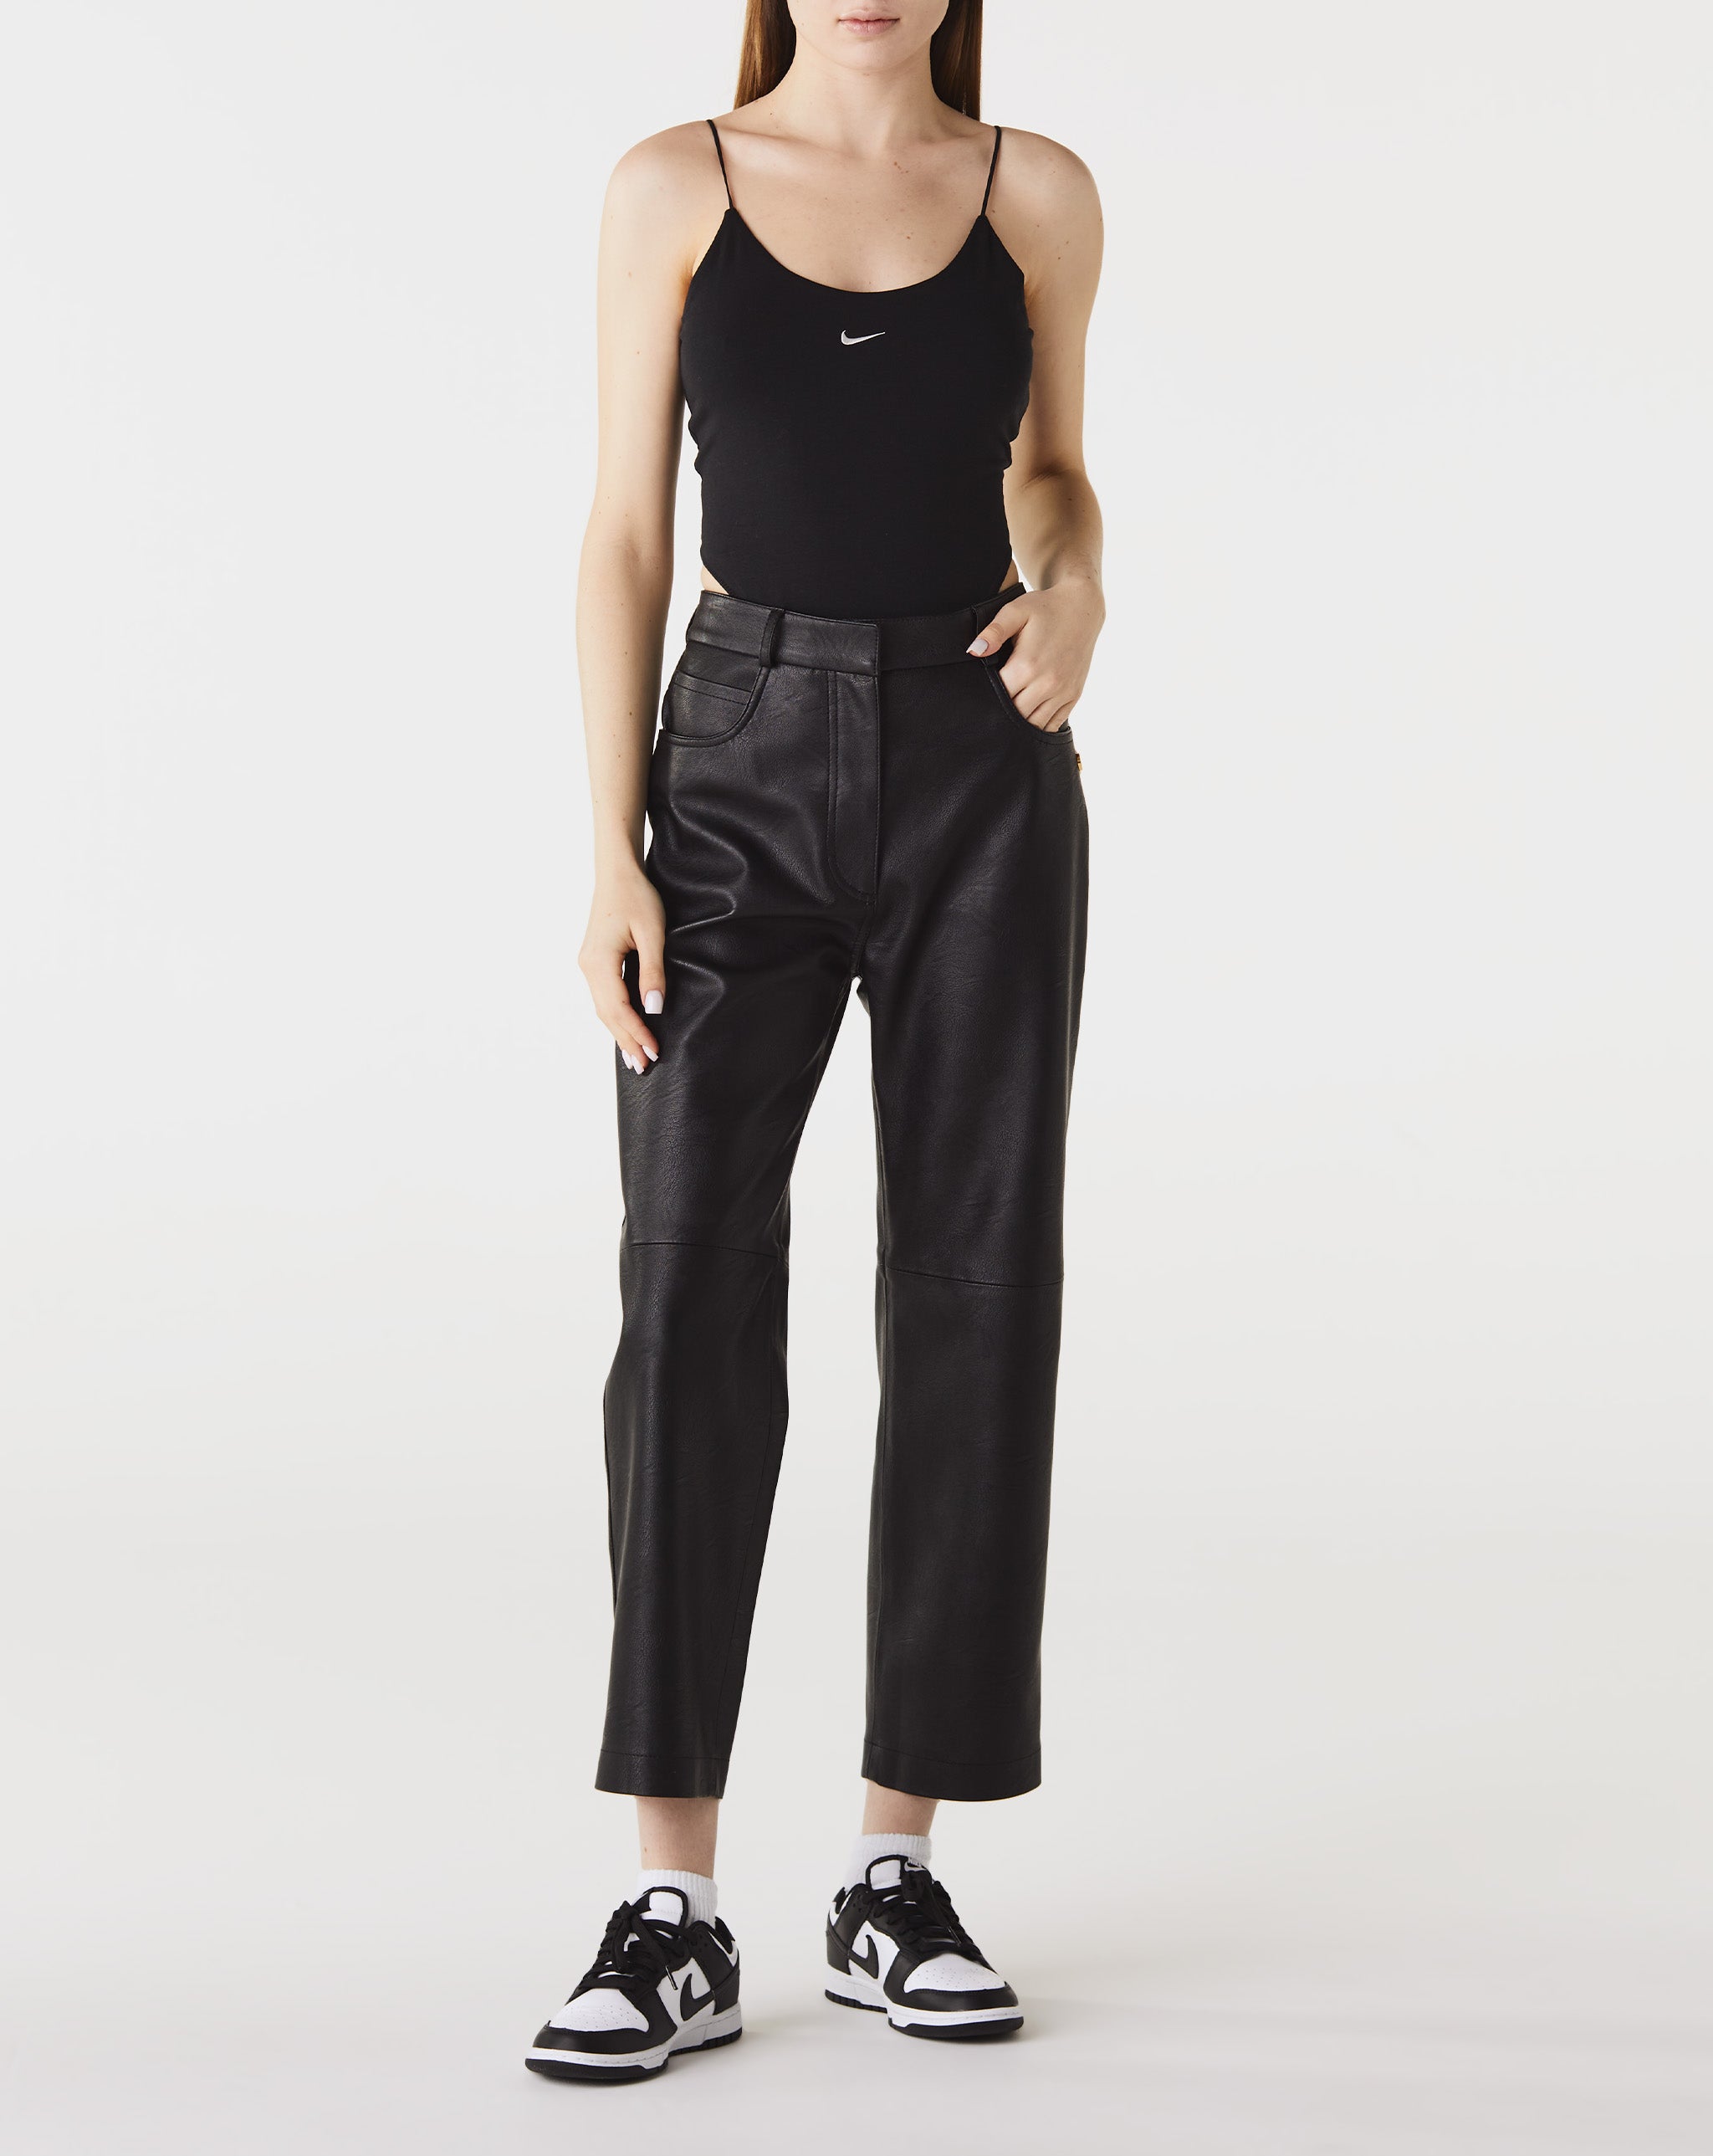 Nike tailwind Women's Chill Knit Cami Bodysuit  - Cheap Urlfreeze Jordan outlet